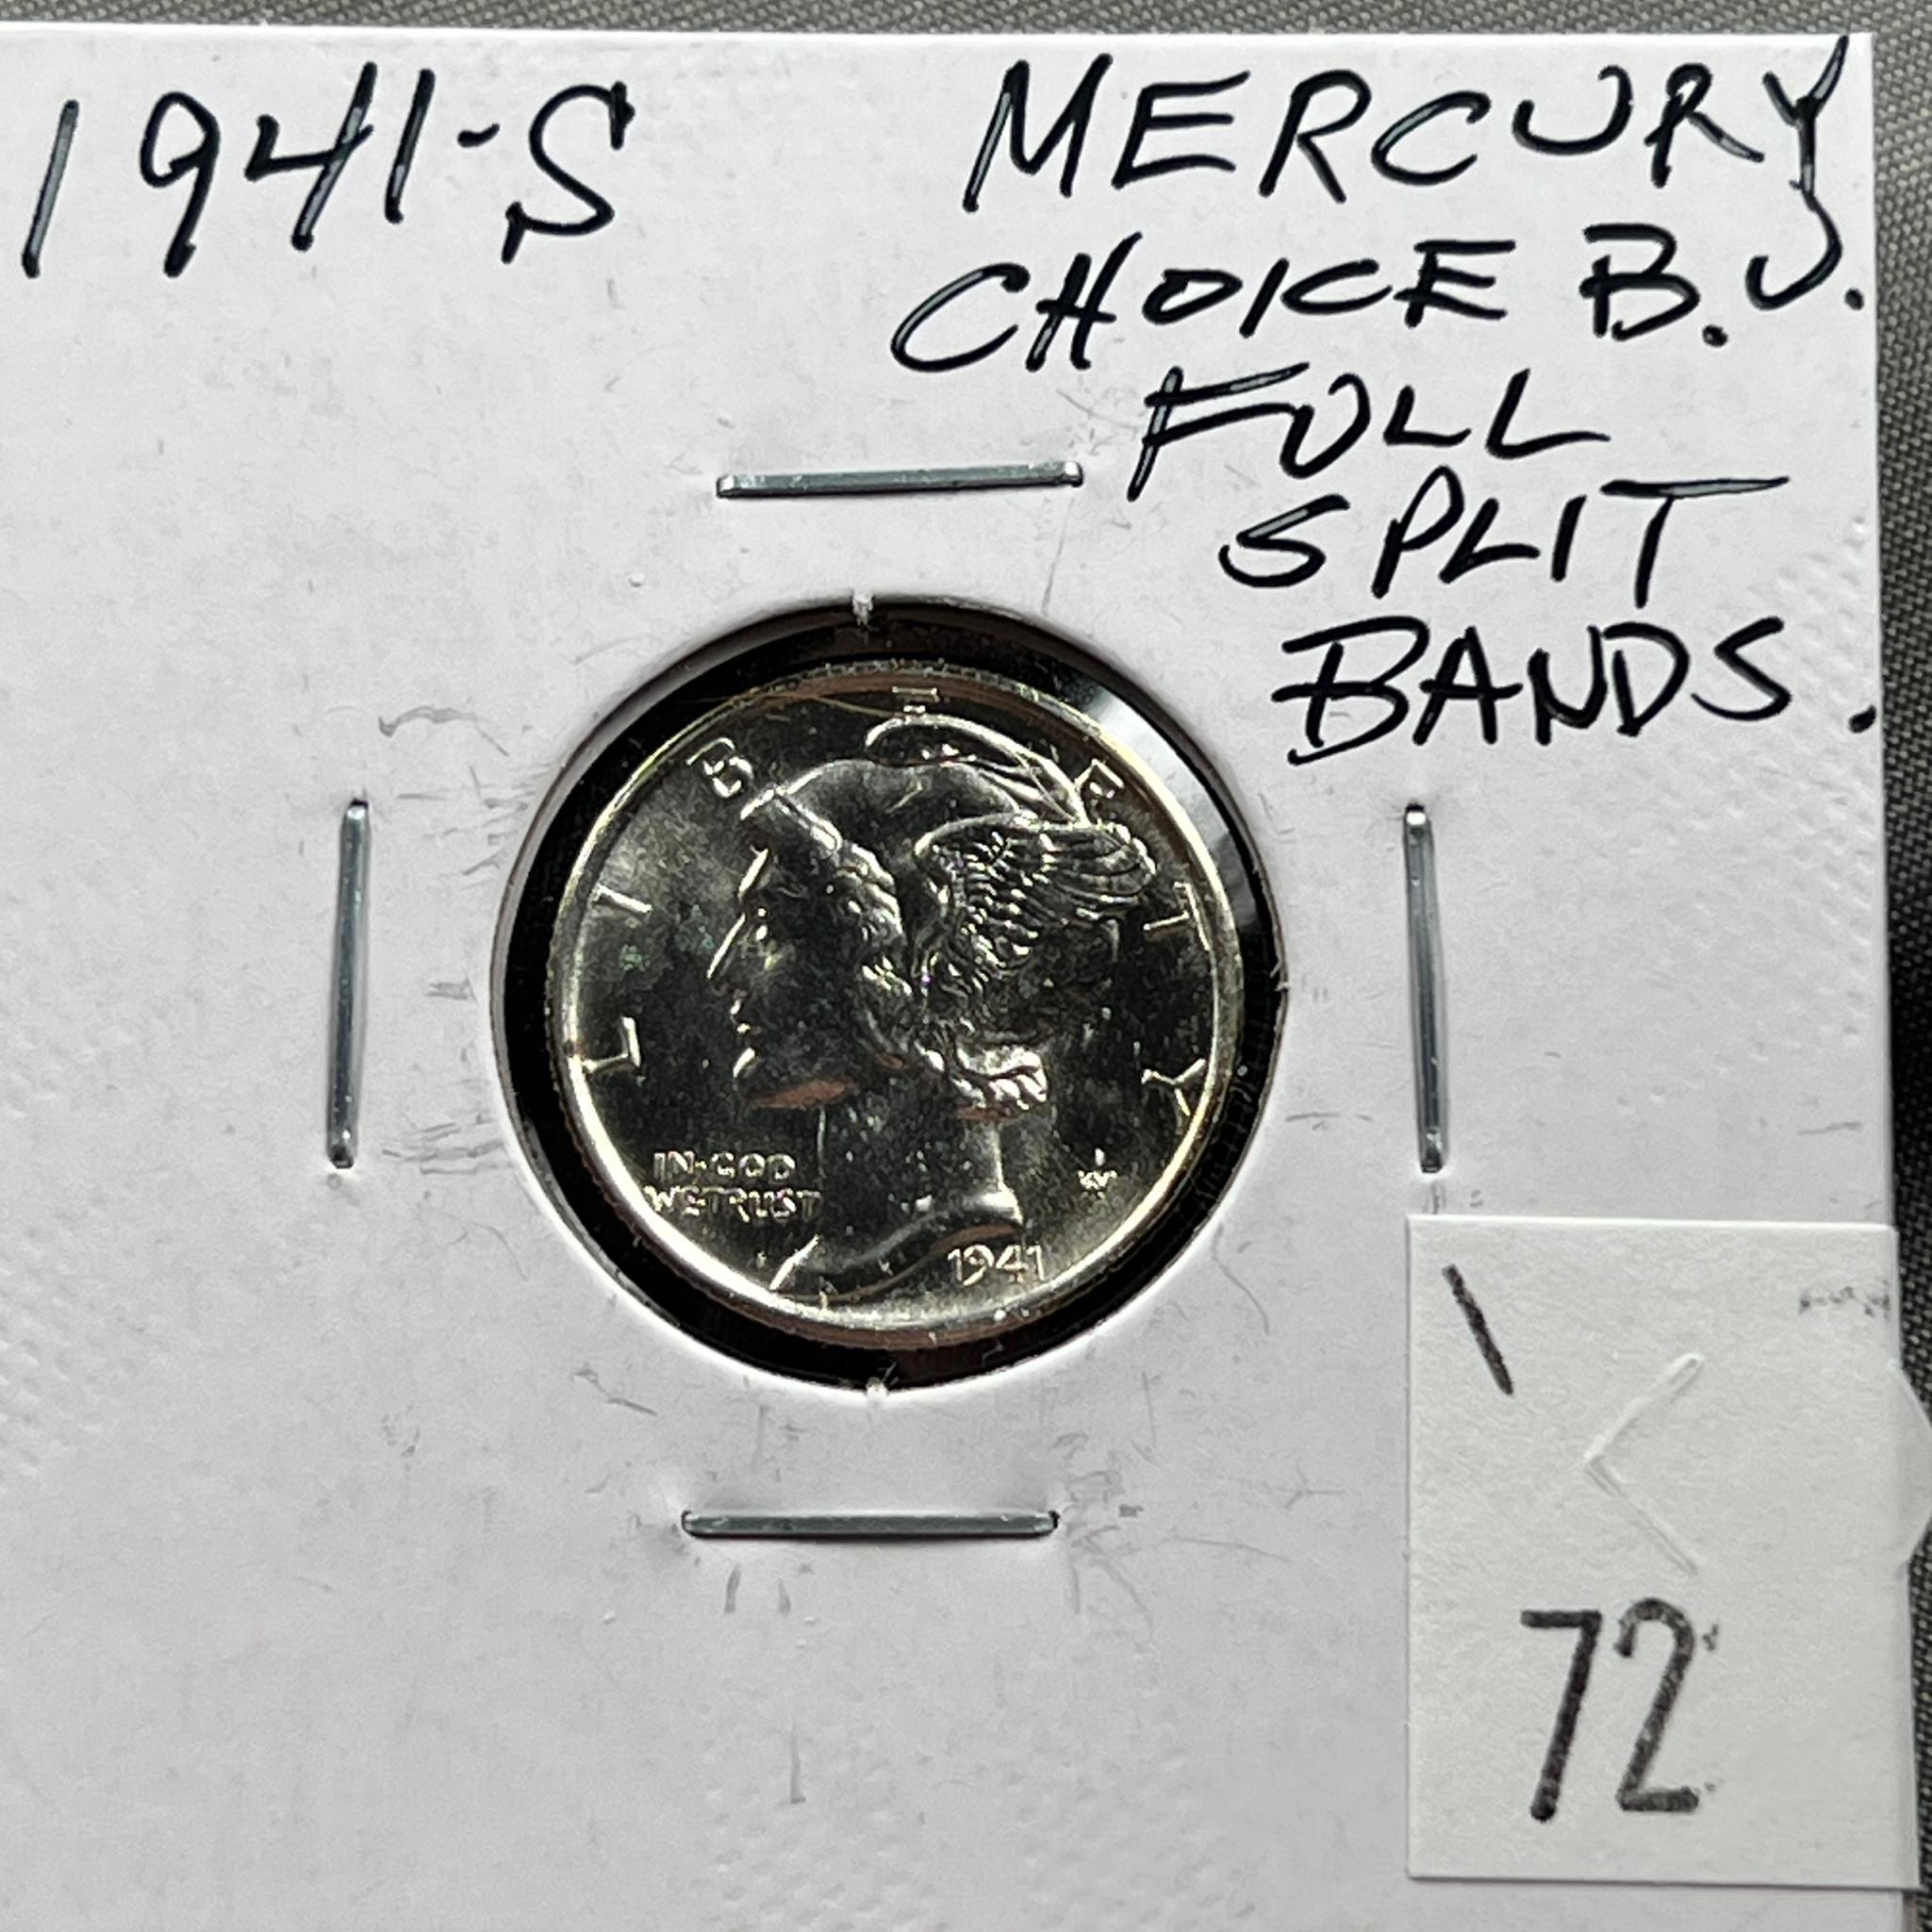 1941-S Mercury Dime, Choice BU, Full Split Bands